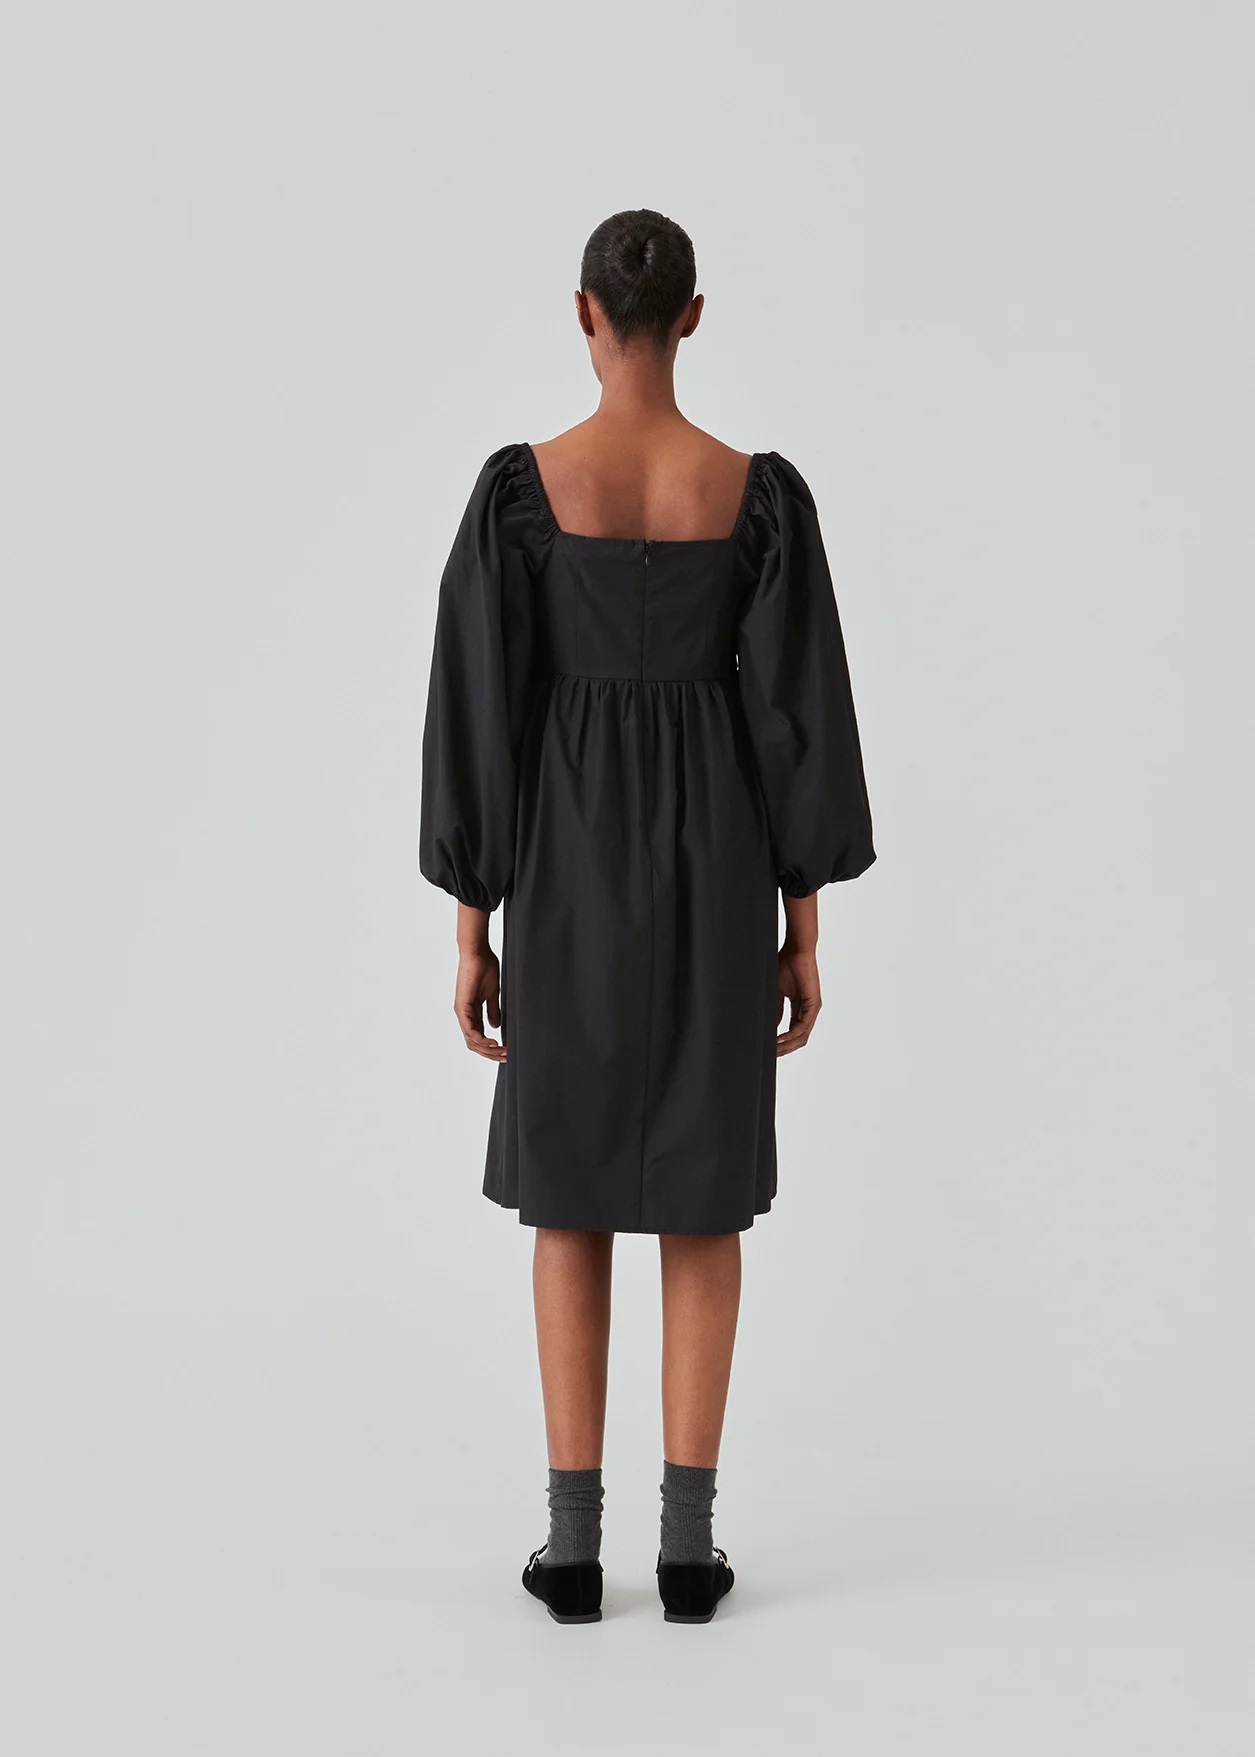 modstrom-fayettemd-dress-black-web-model-back-1255×1757.jpg